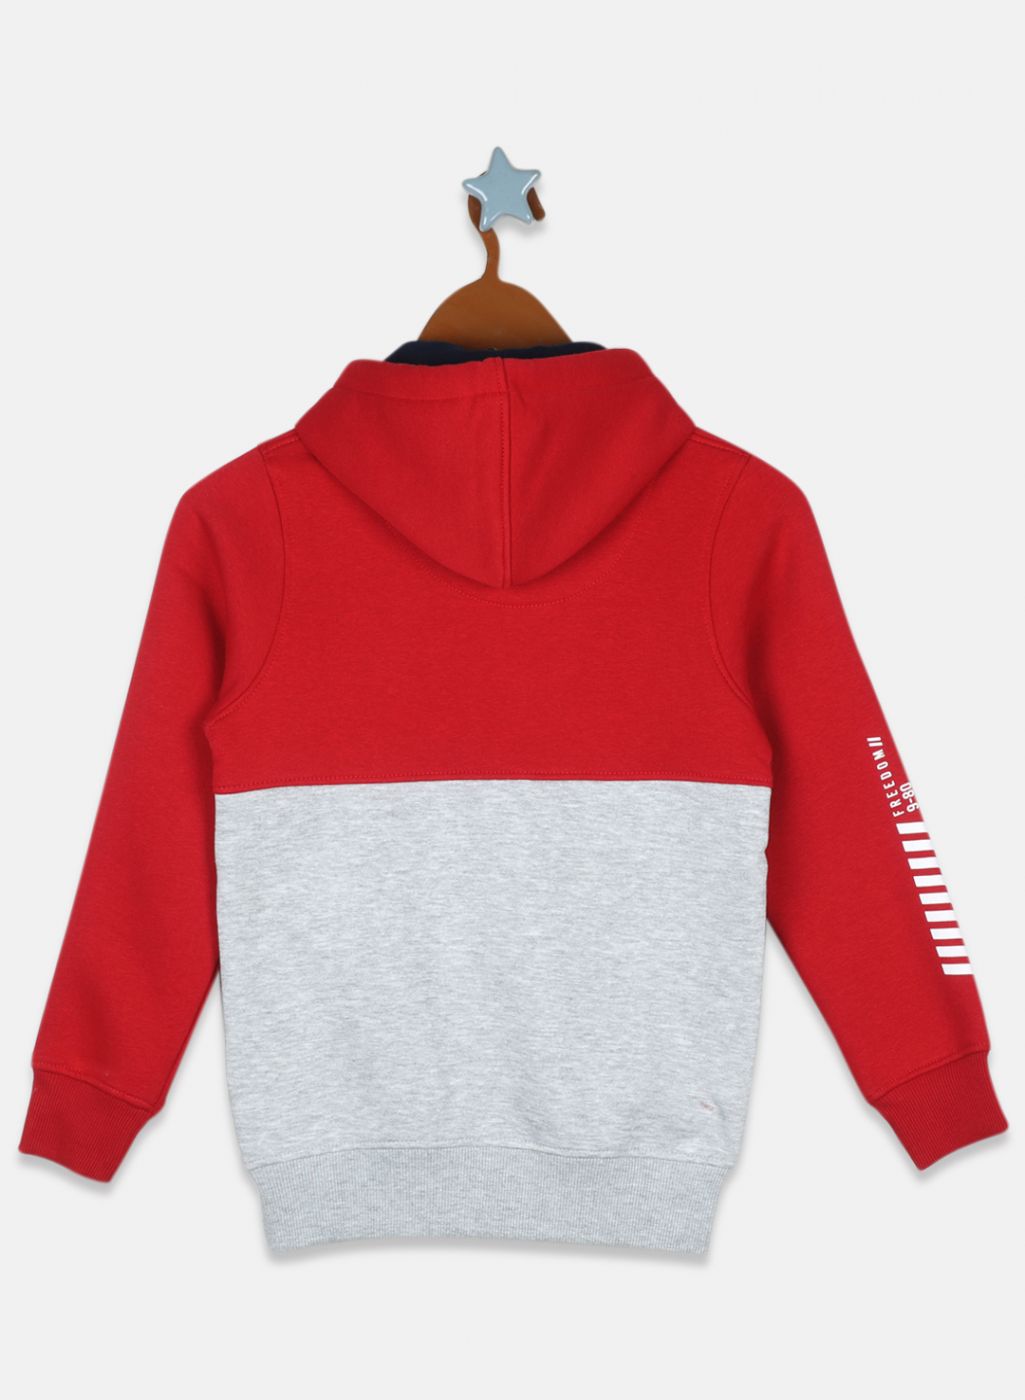 Boys Red Printed Sweatshirt